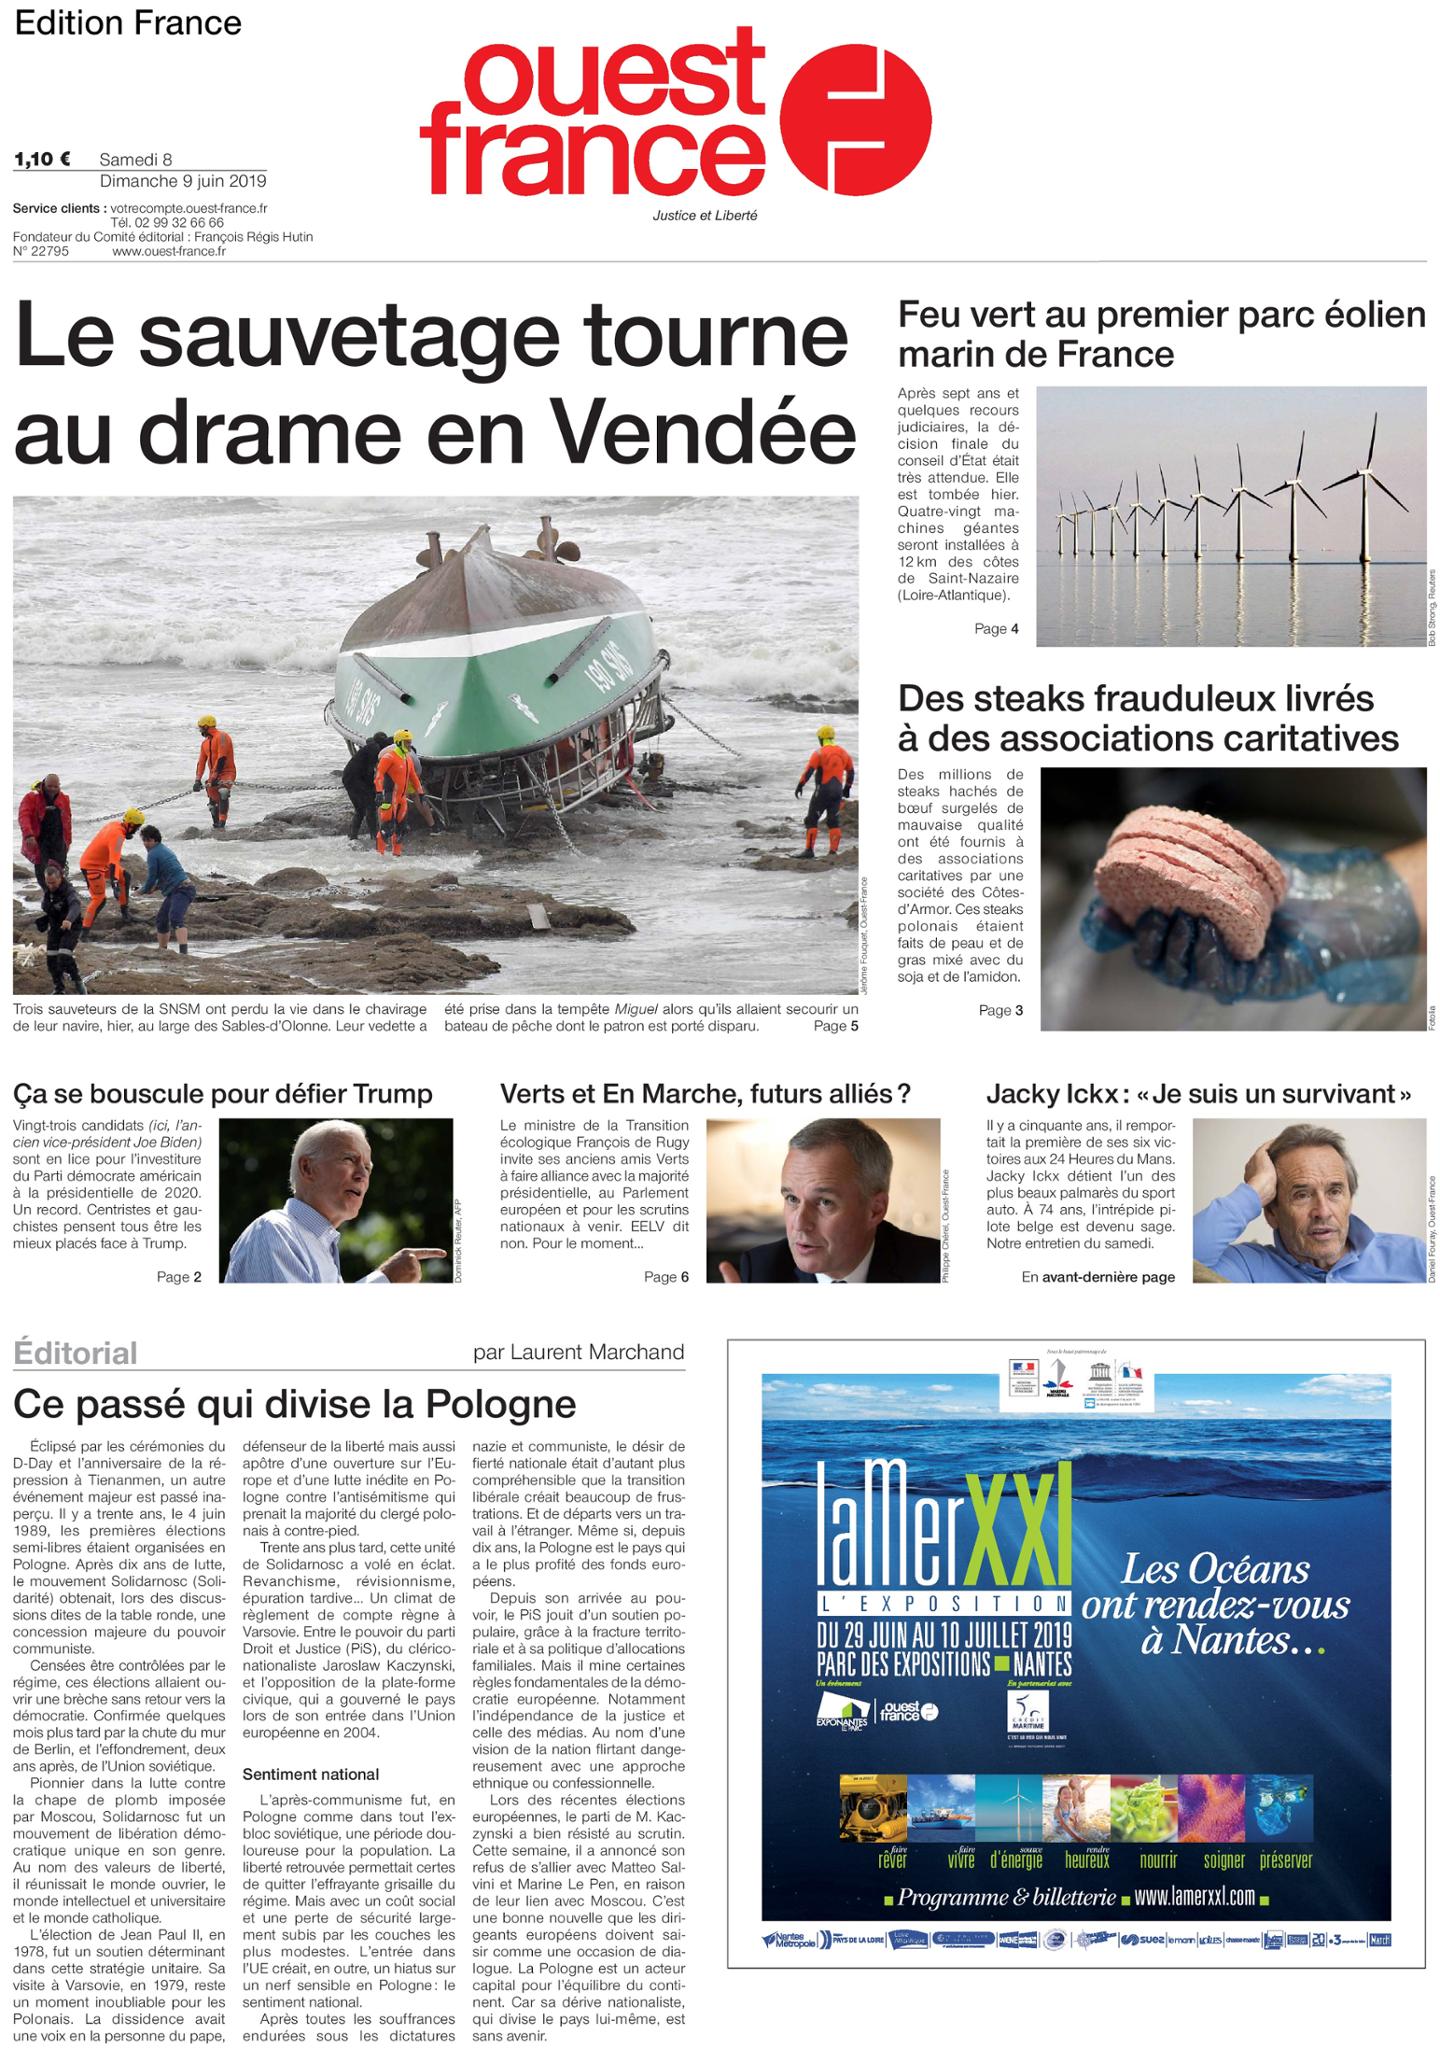 Ouest-France (6 Editions) du Samedi 8 Juin 2019